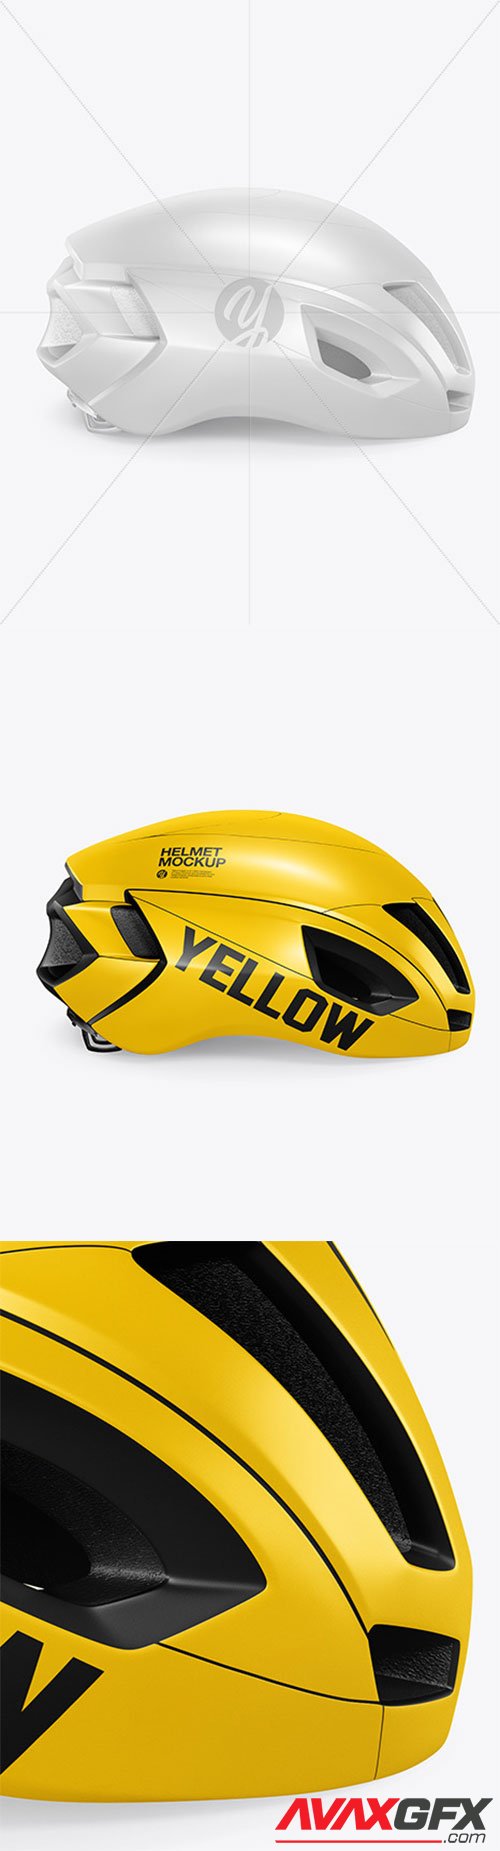 Cycling Helmet Mockup 78752